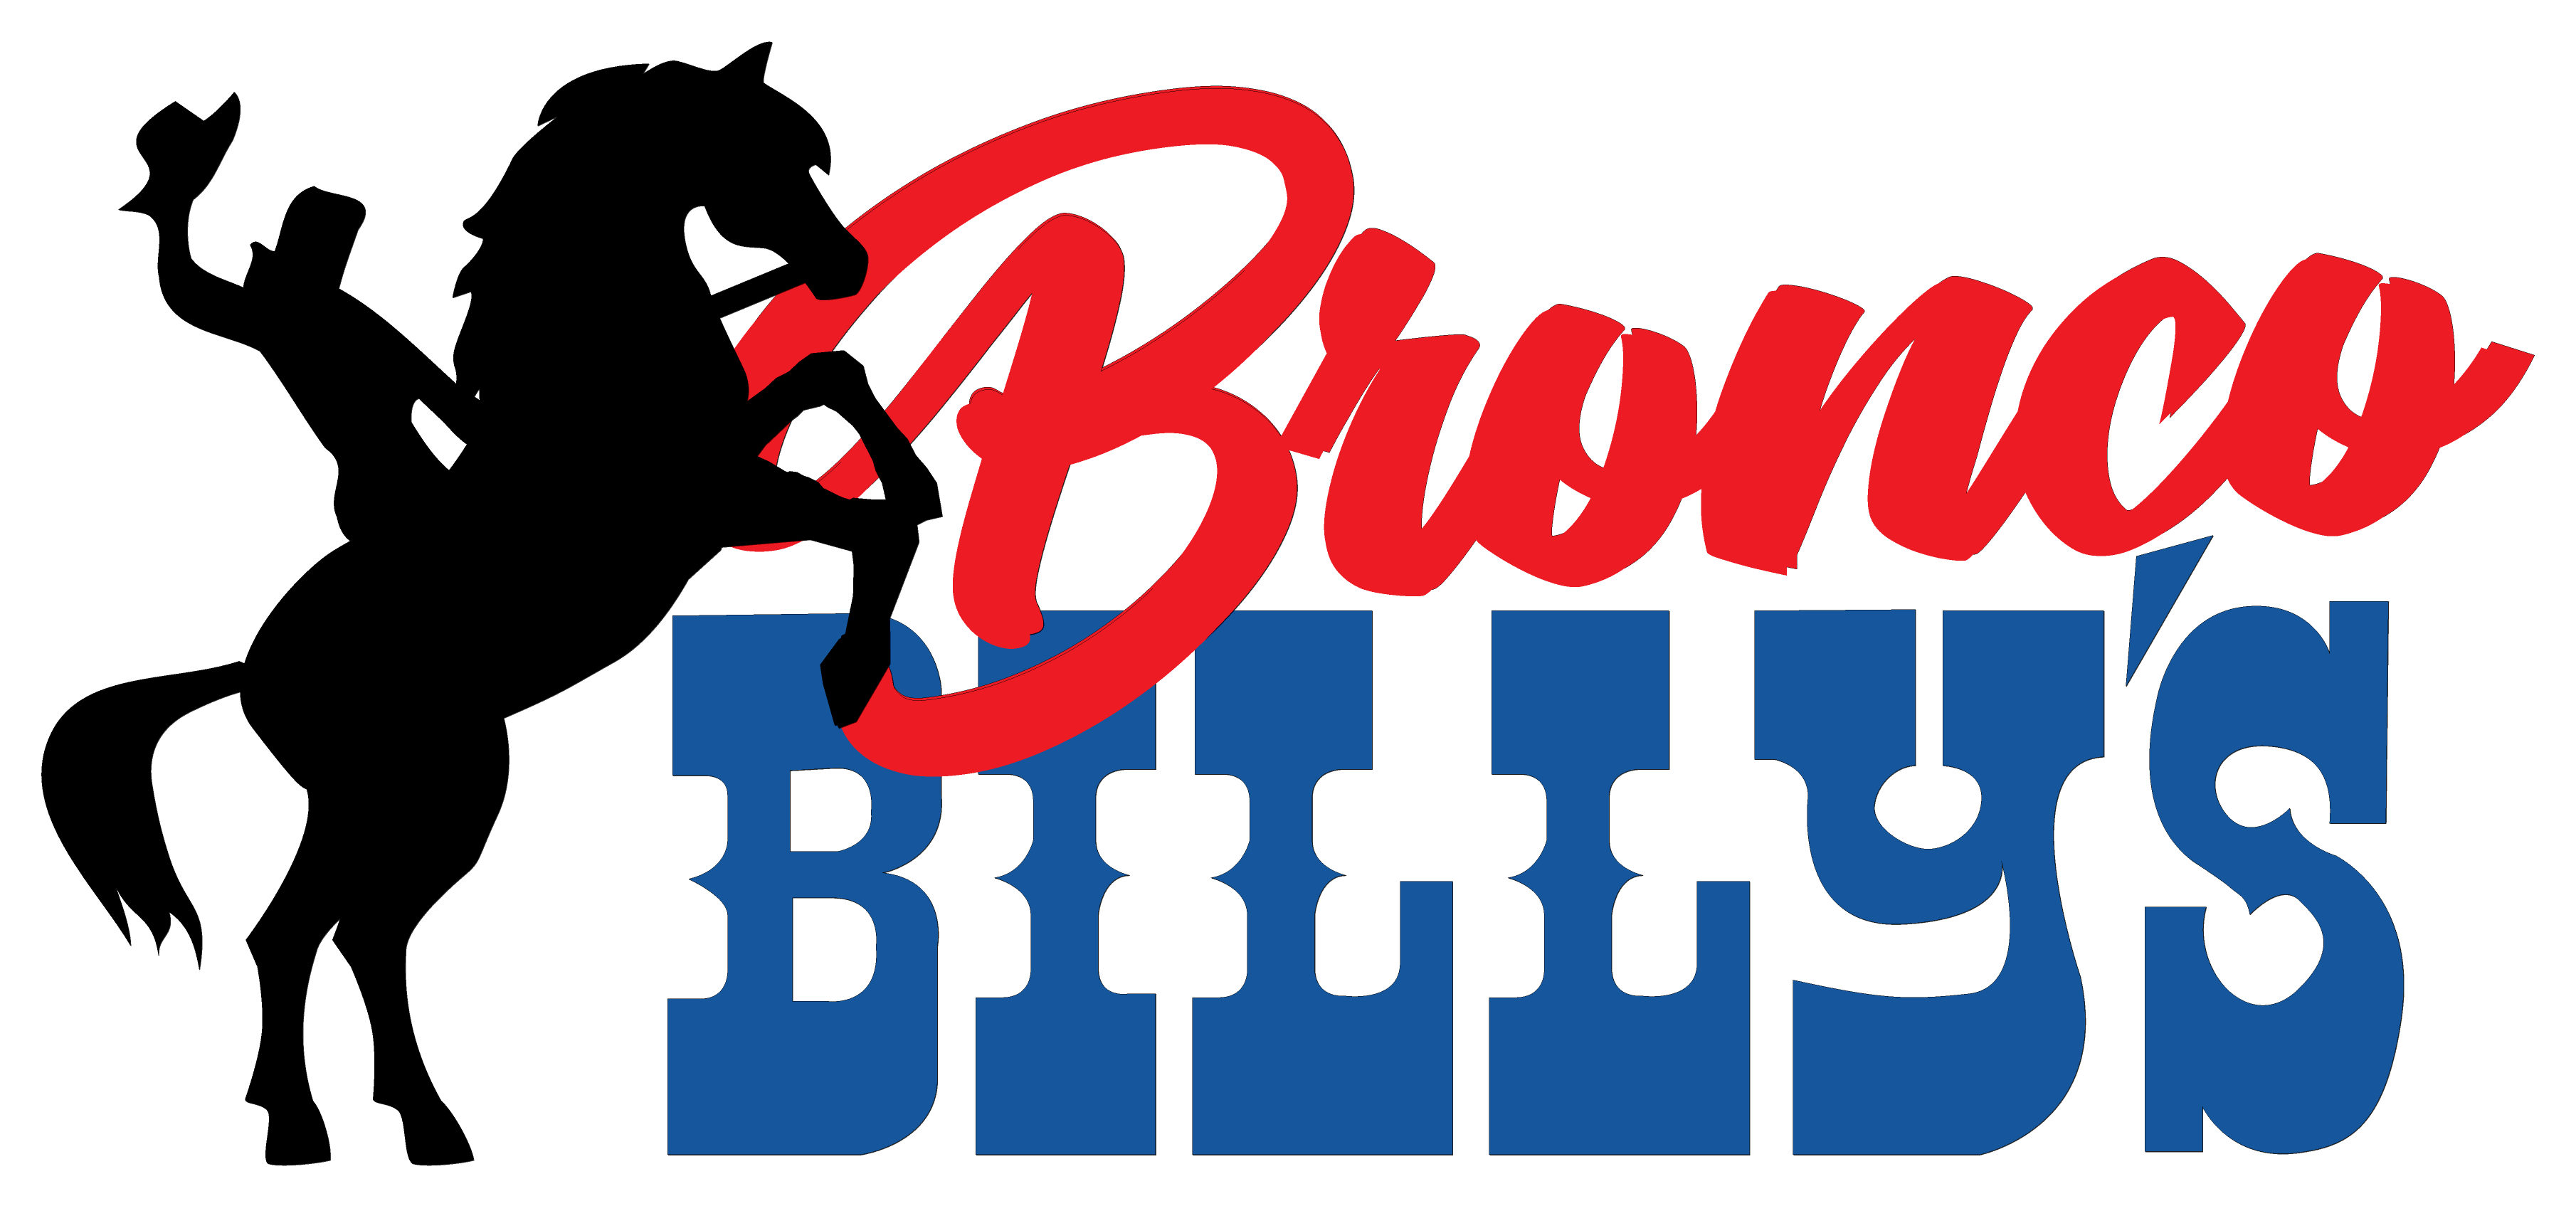 Broncol Billy's Casino Logo